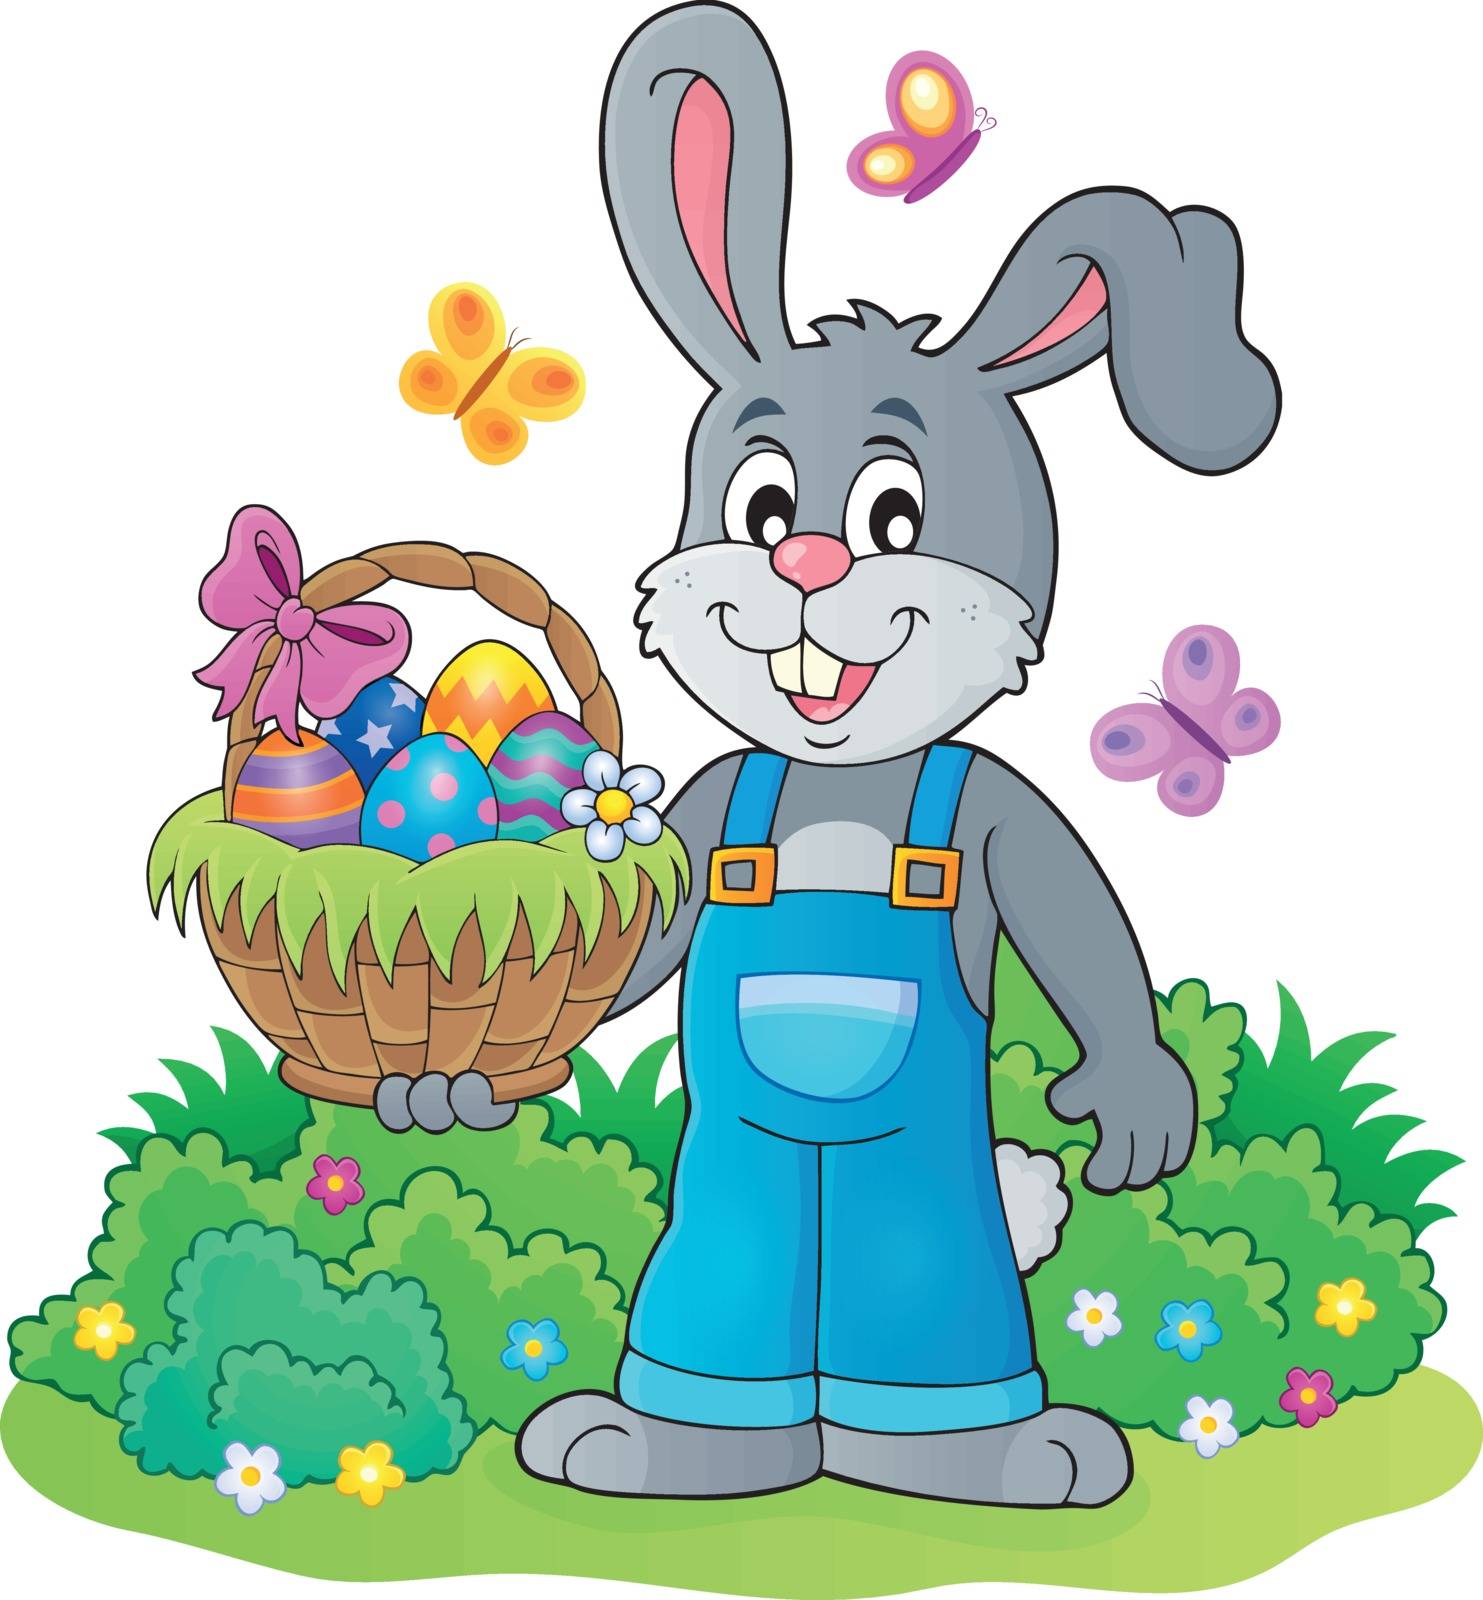 Bunny holding Easter basket theme 4 - eps10 vector illustration.